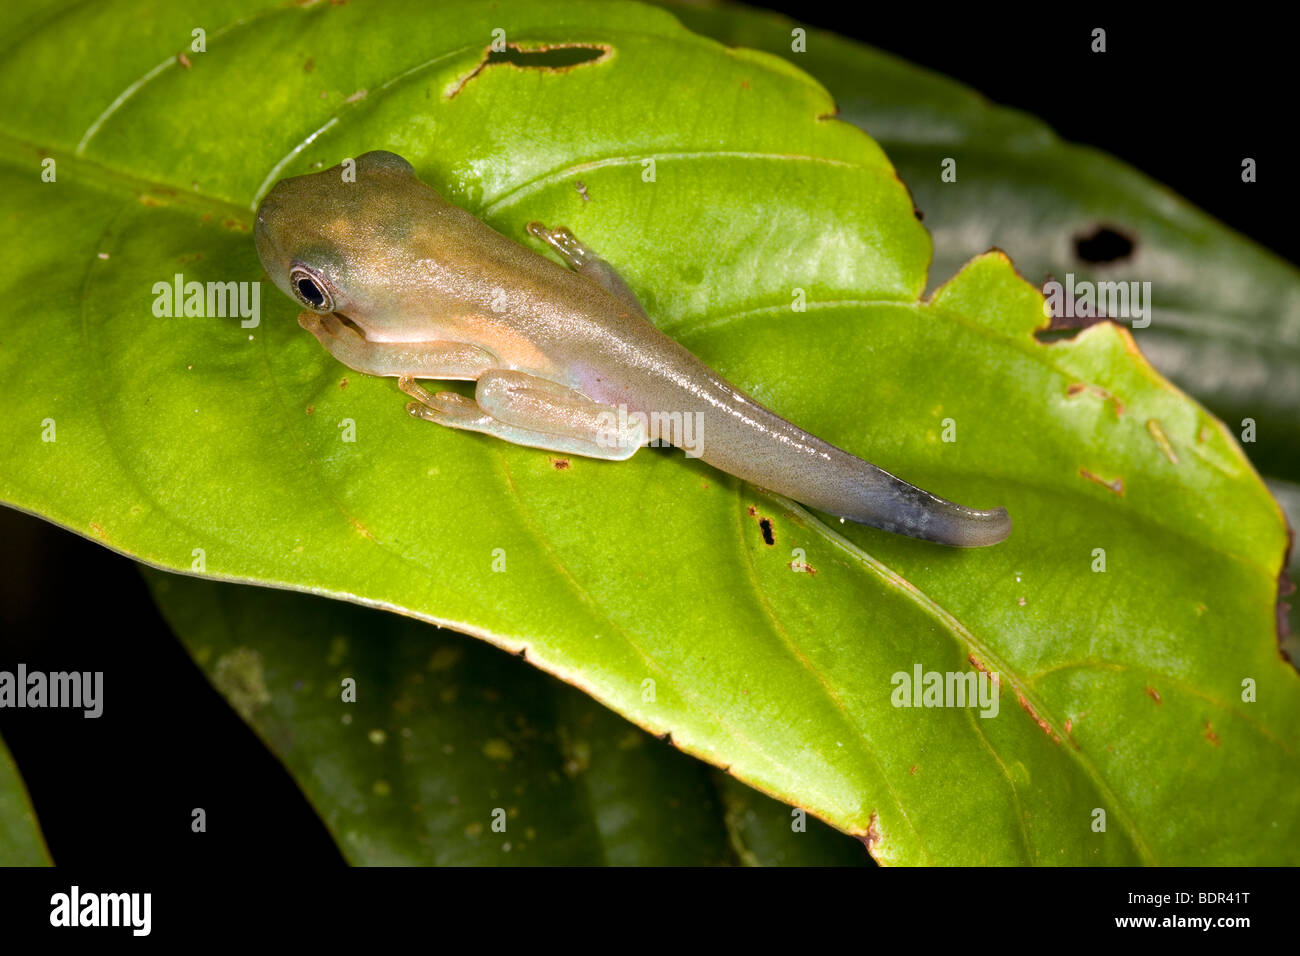 Amphibian metamorphosis - Tadpole changing into a frog Stock Photo